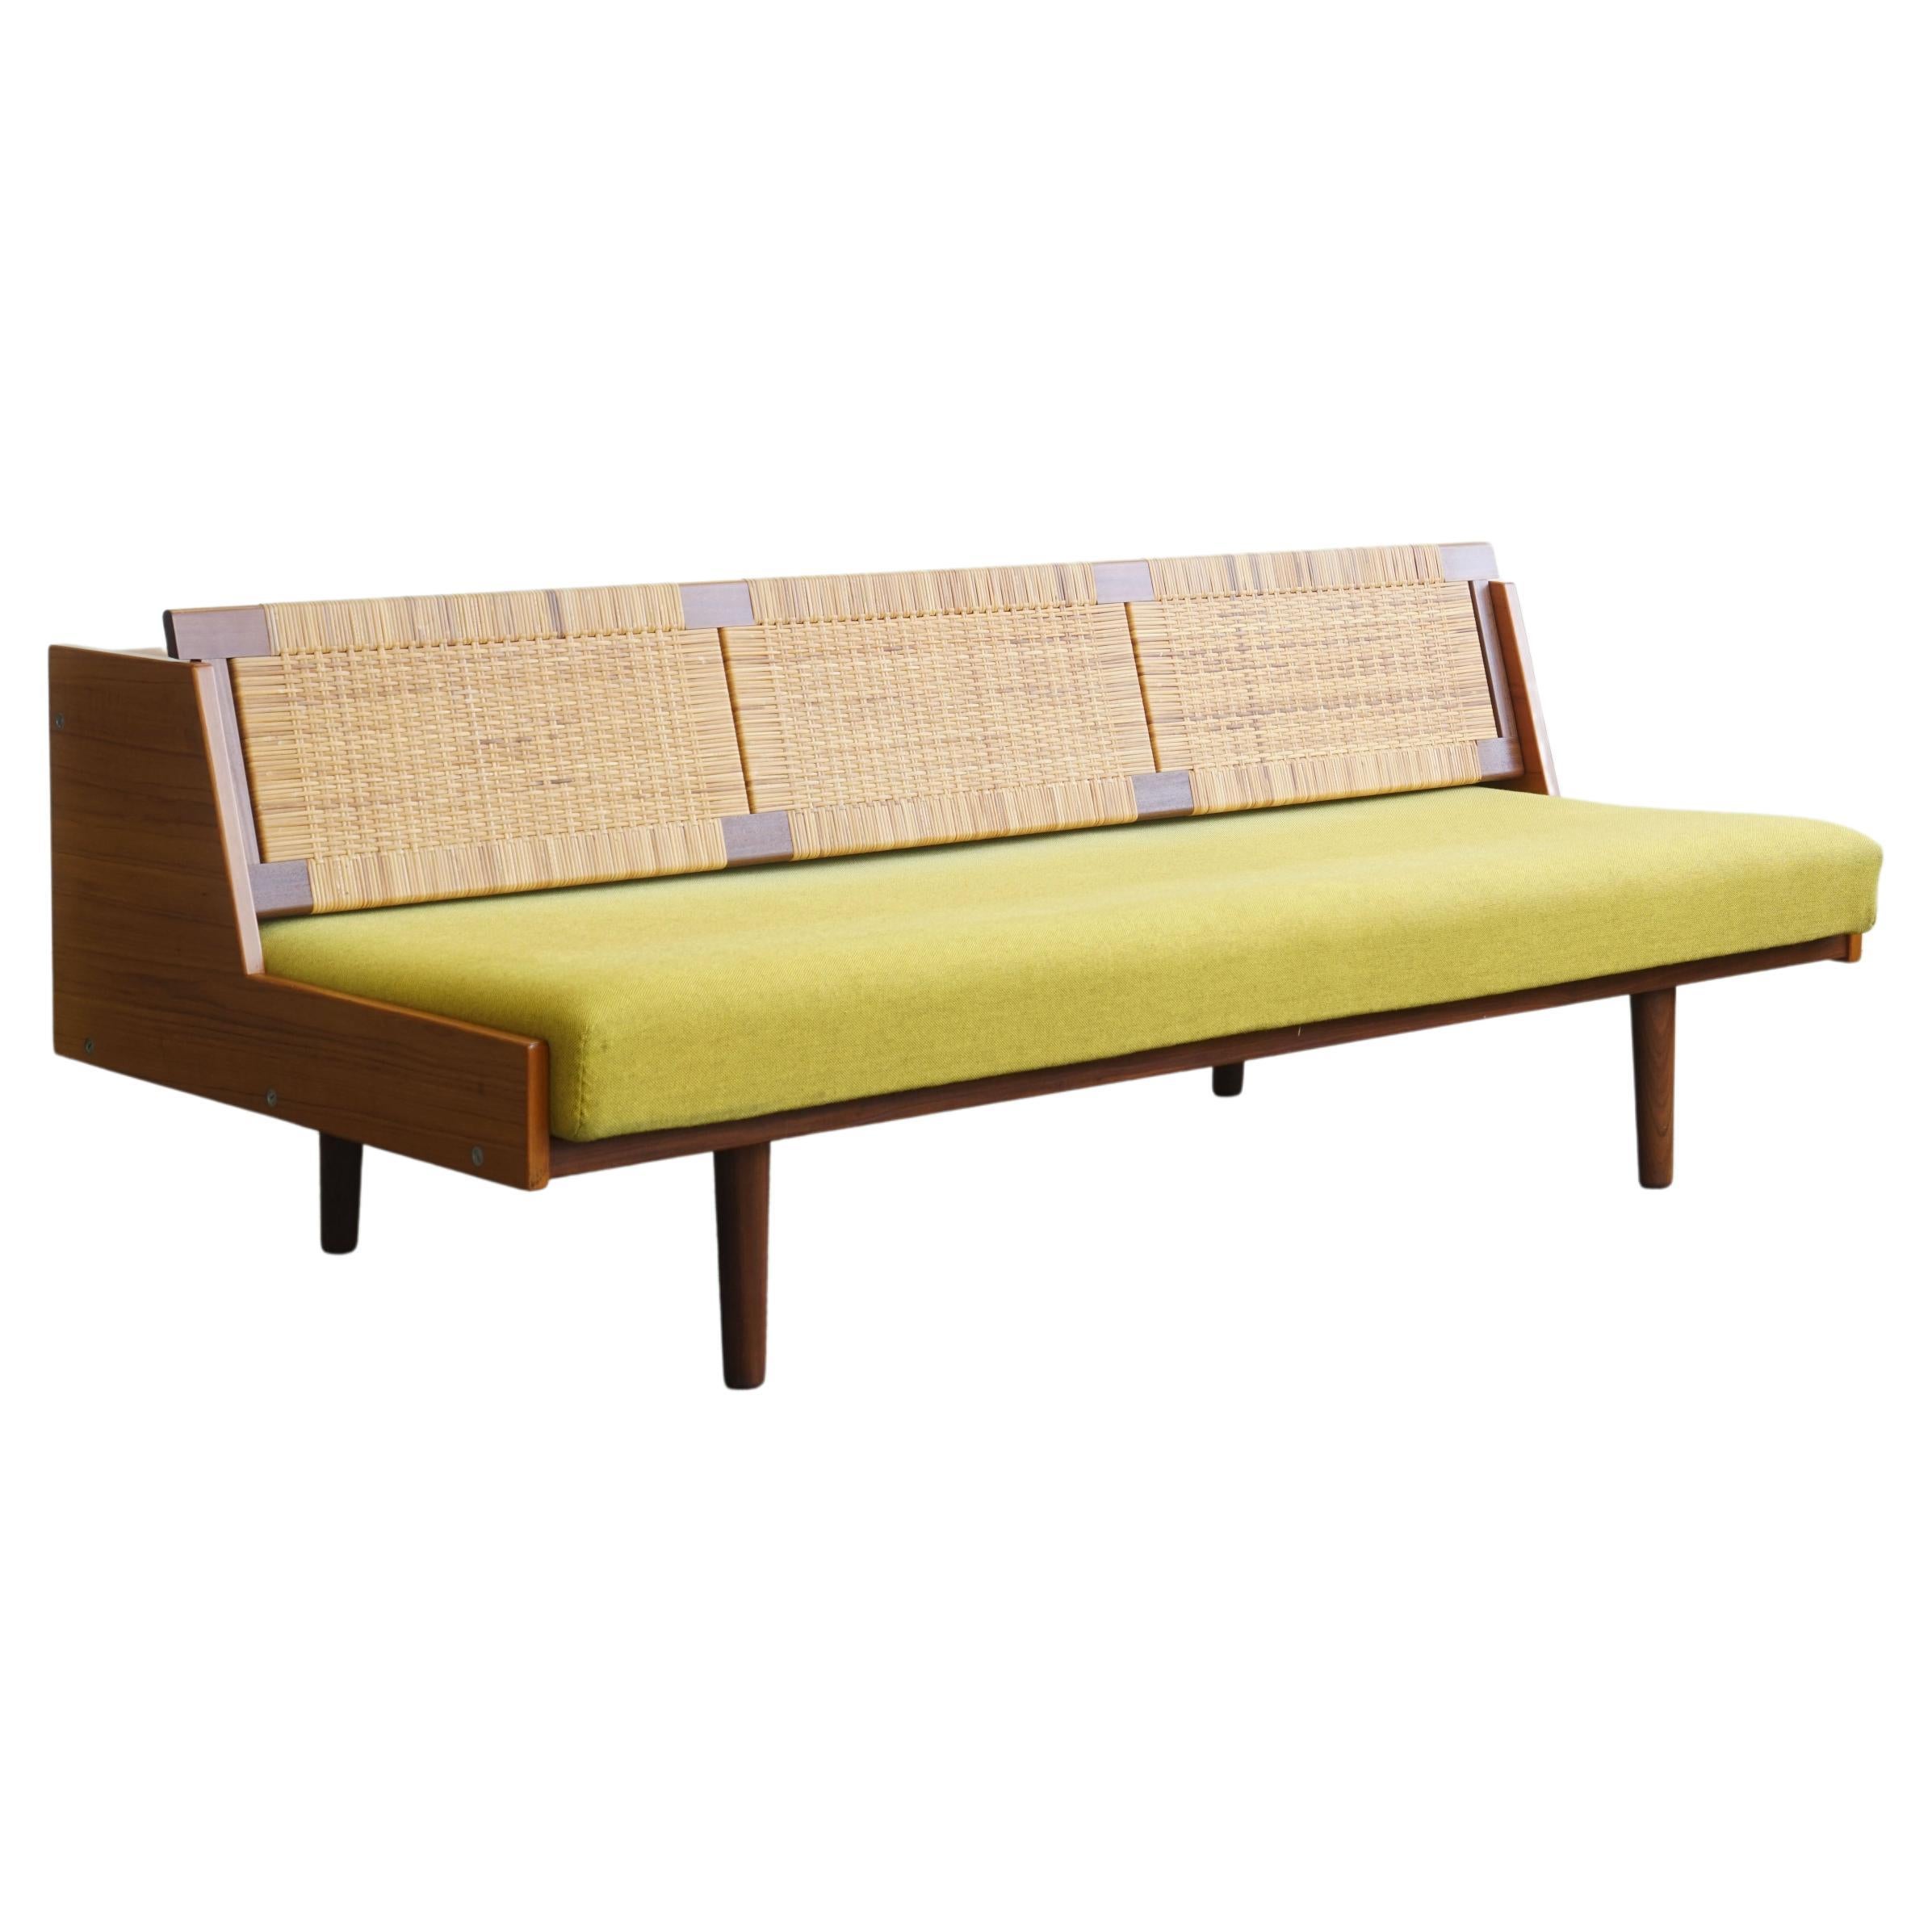 Hans Wegner Sofa Daybed Model GE7 in Teak and Cane 1960's for Getama For Sale